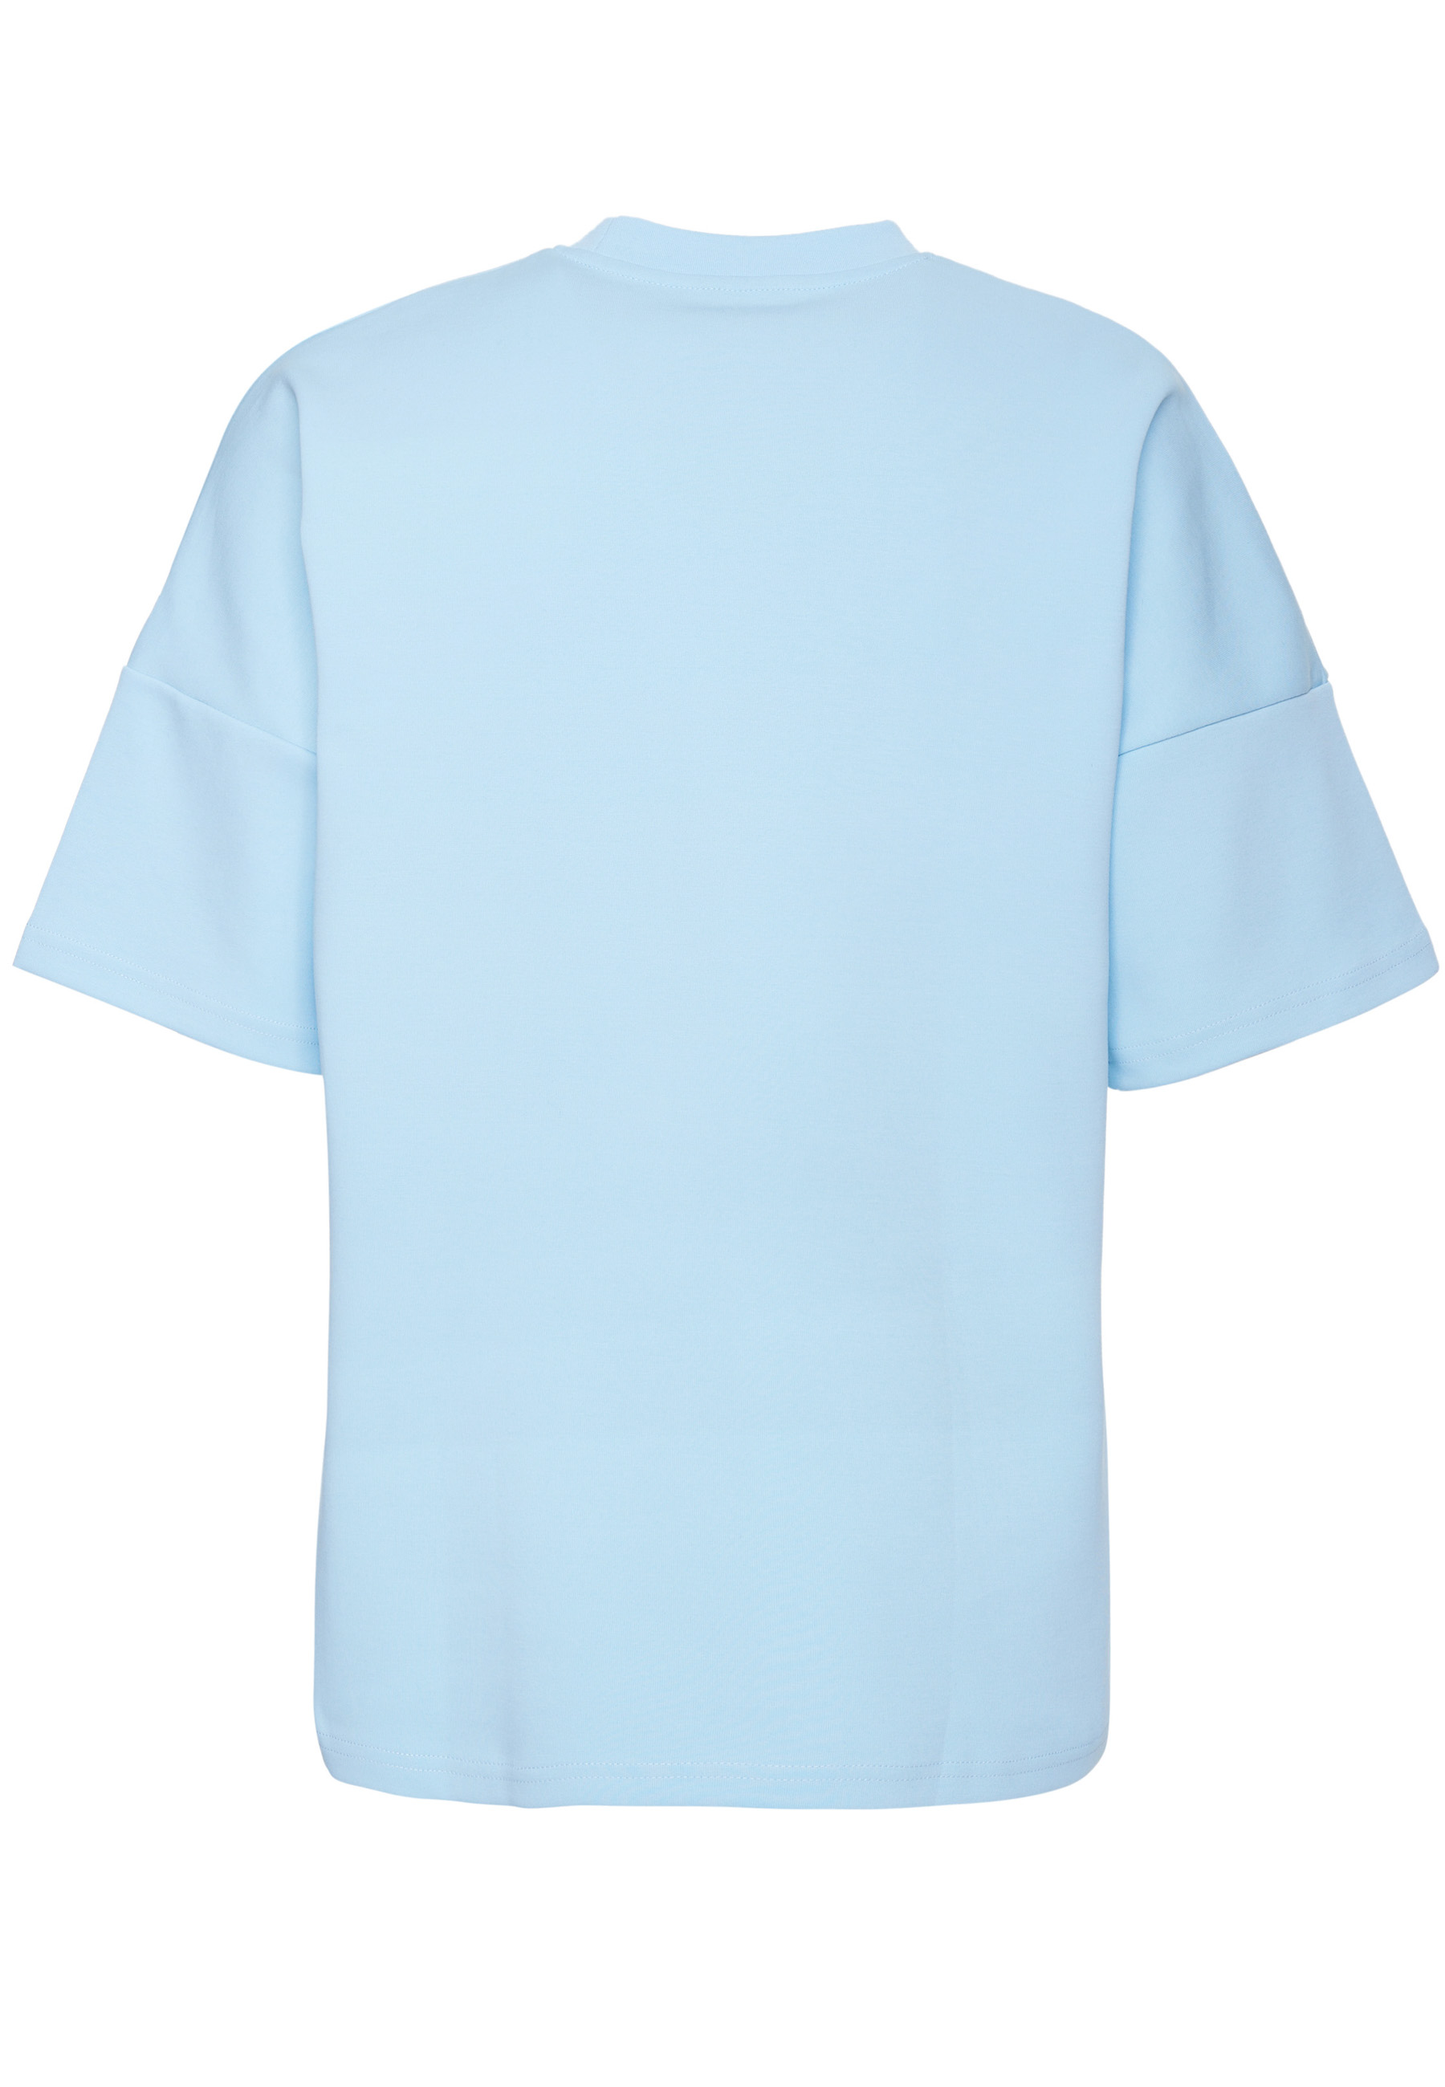 LUXAGER T-Shirt Oversize sky blue